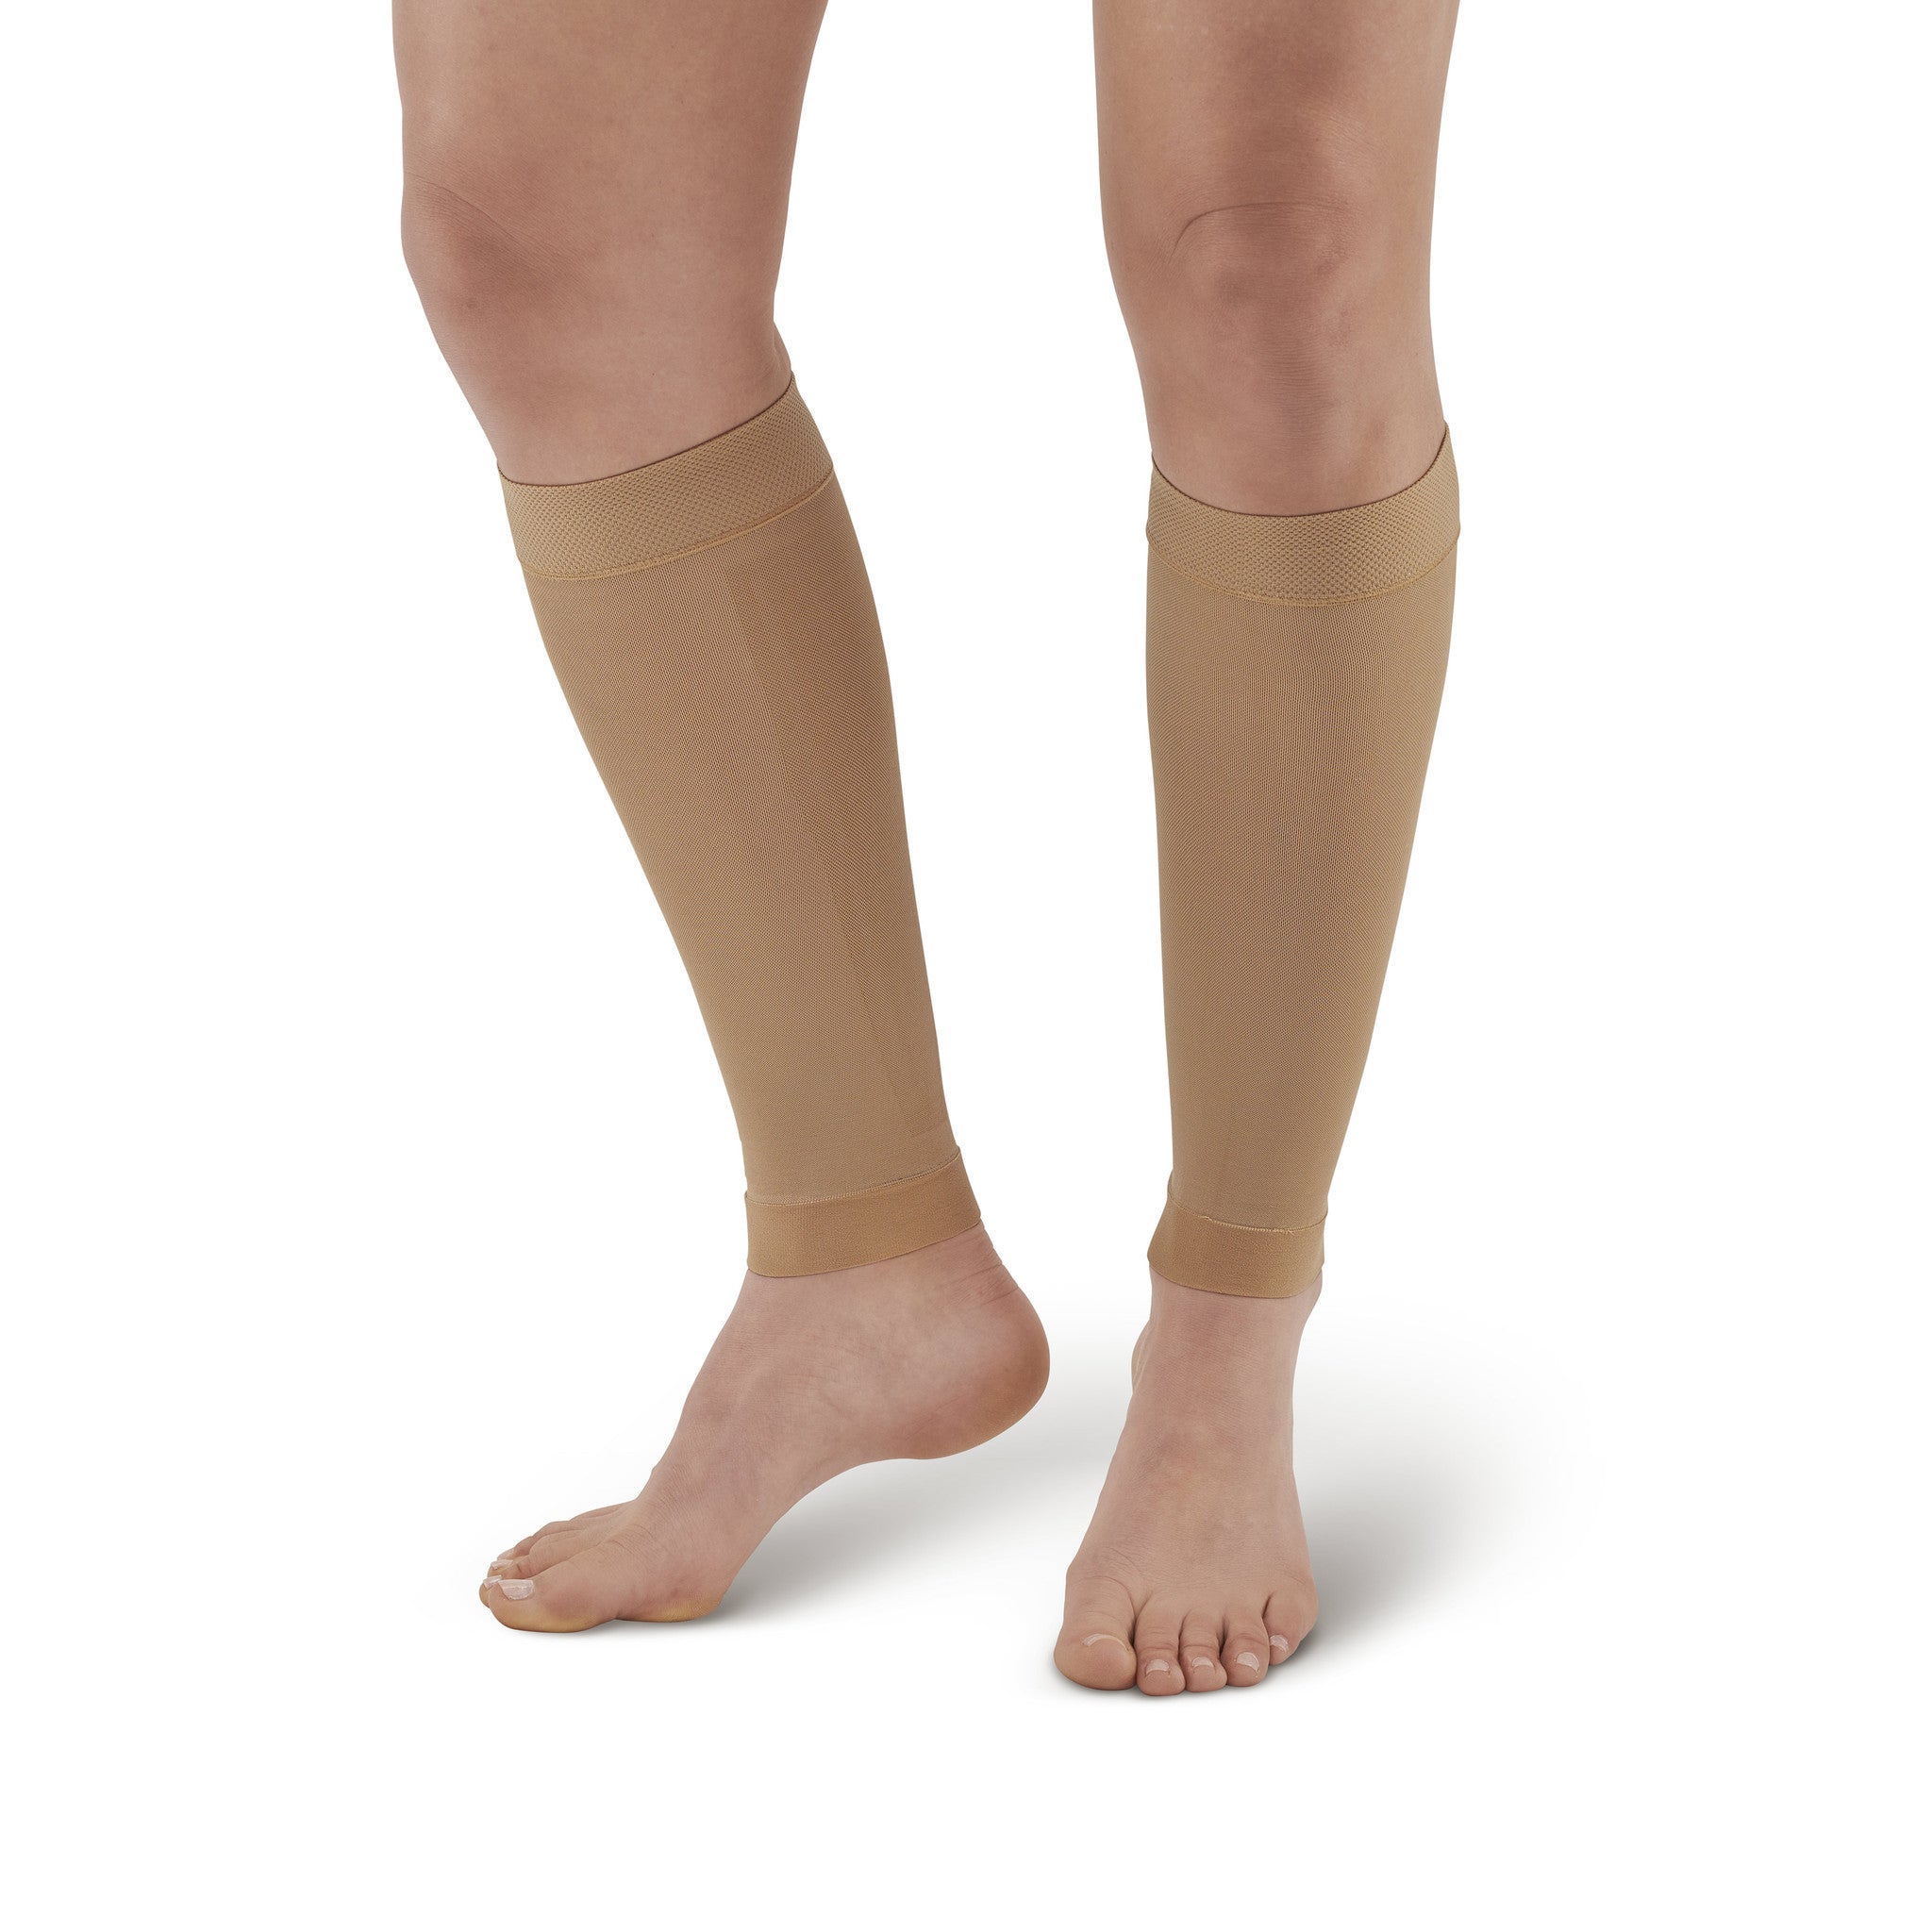 Buy SWOLF Medical Calf Compression Sleeve Men Womens, 20-30 mmHg